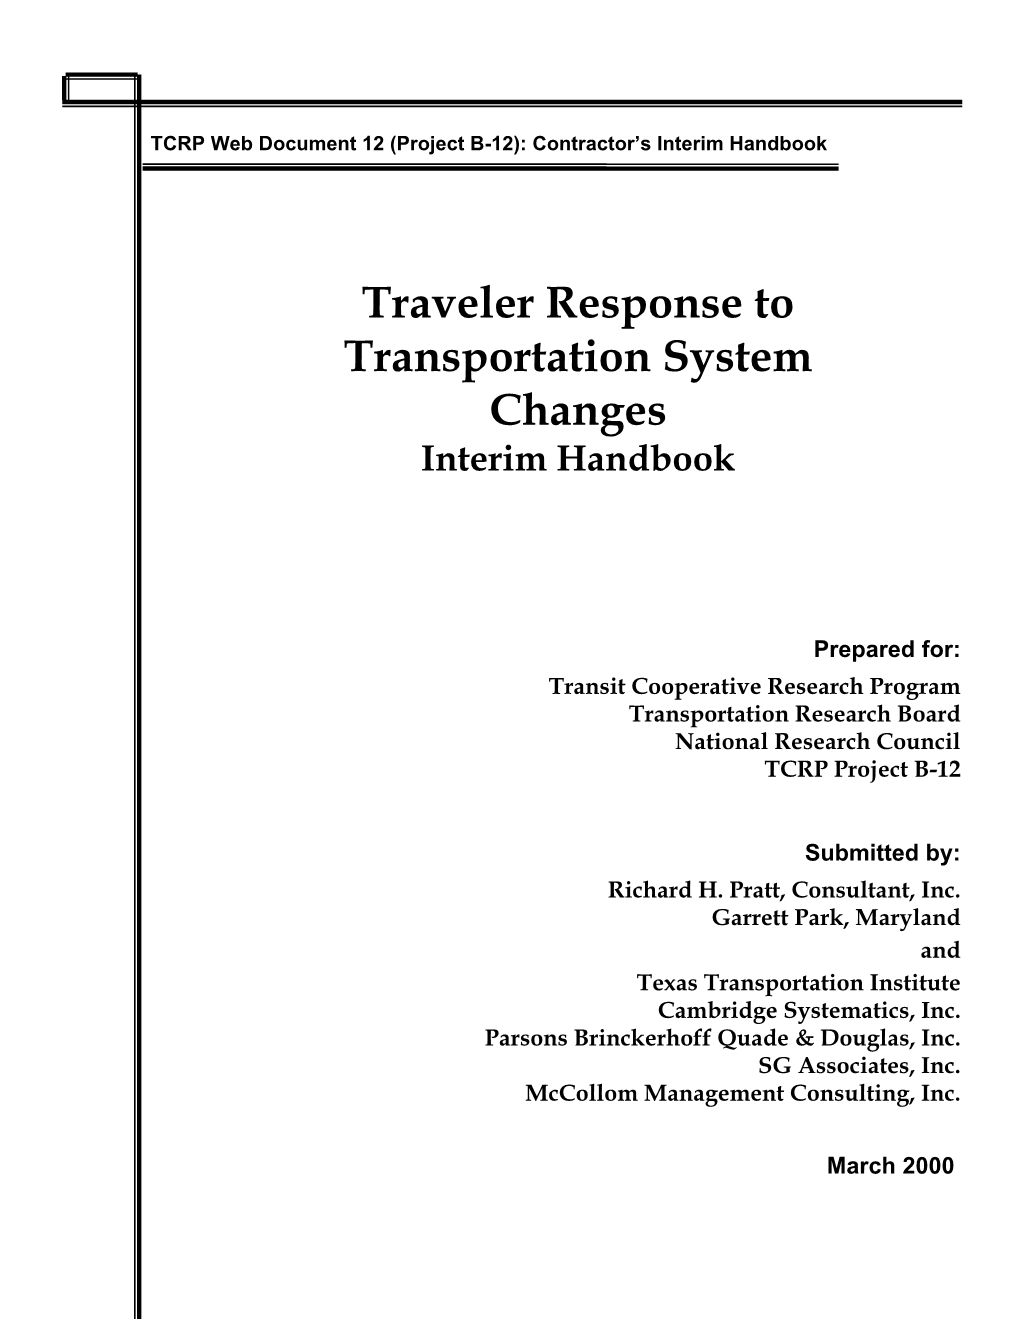 Traveler Response to Transportation System Changes Interim Handbook